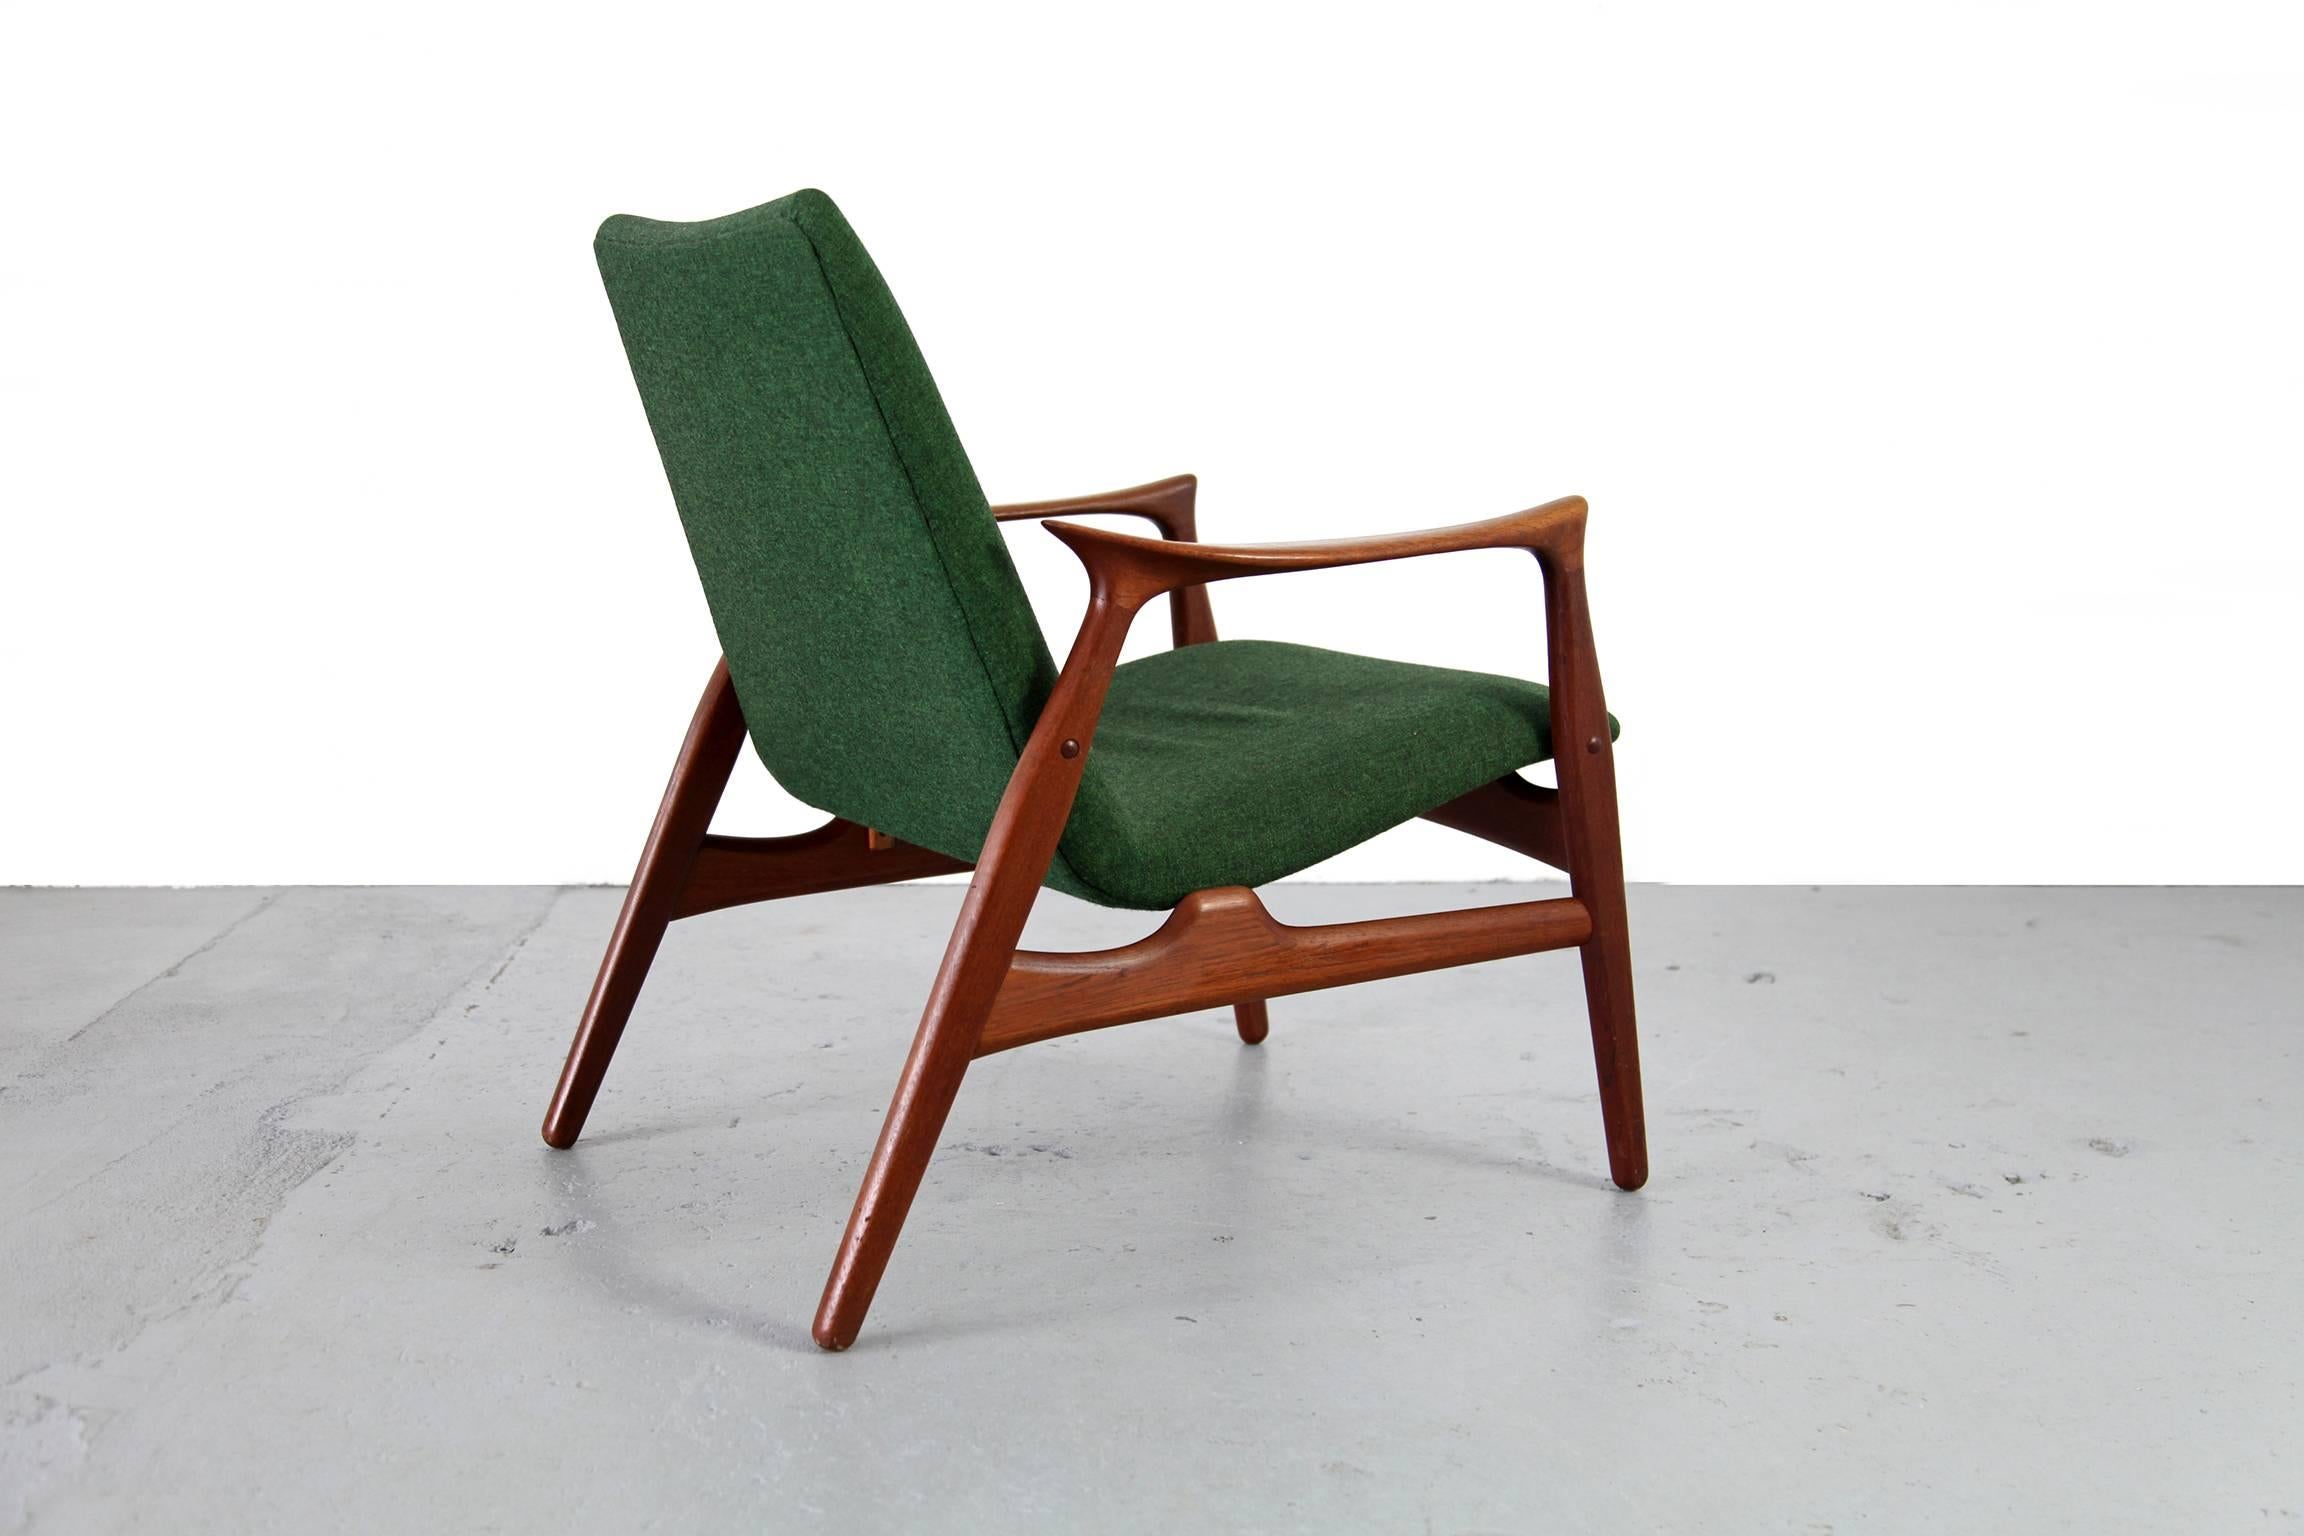 Teak easy chair, model 240 by Arne Hovmand-Olsen for Mogens Kold, designed
before 1958. Organic forms combined with restrained elegance.